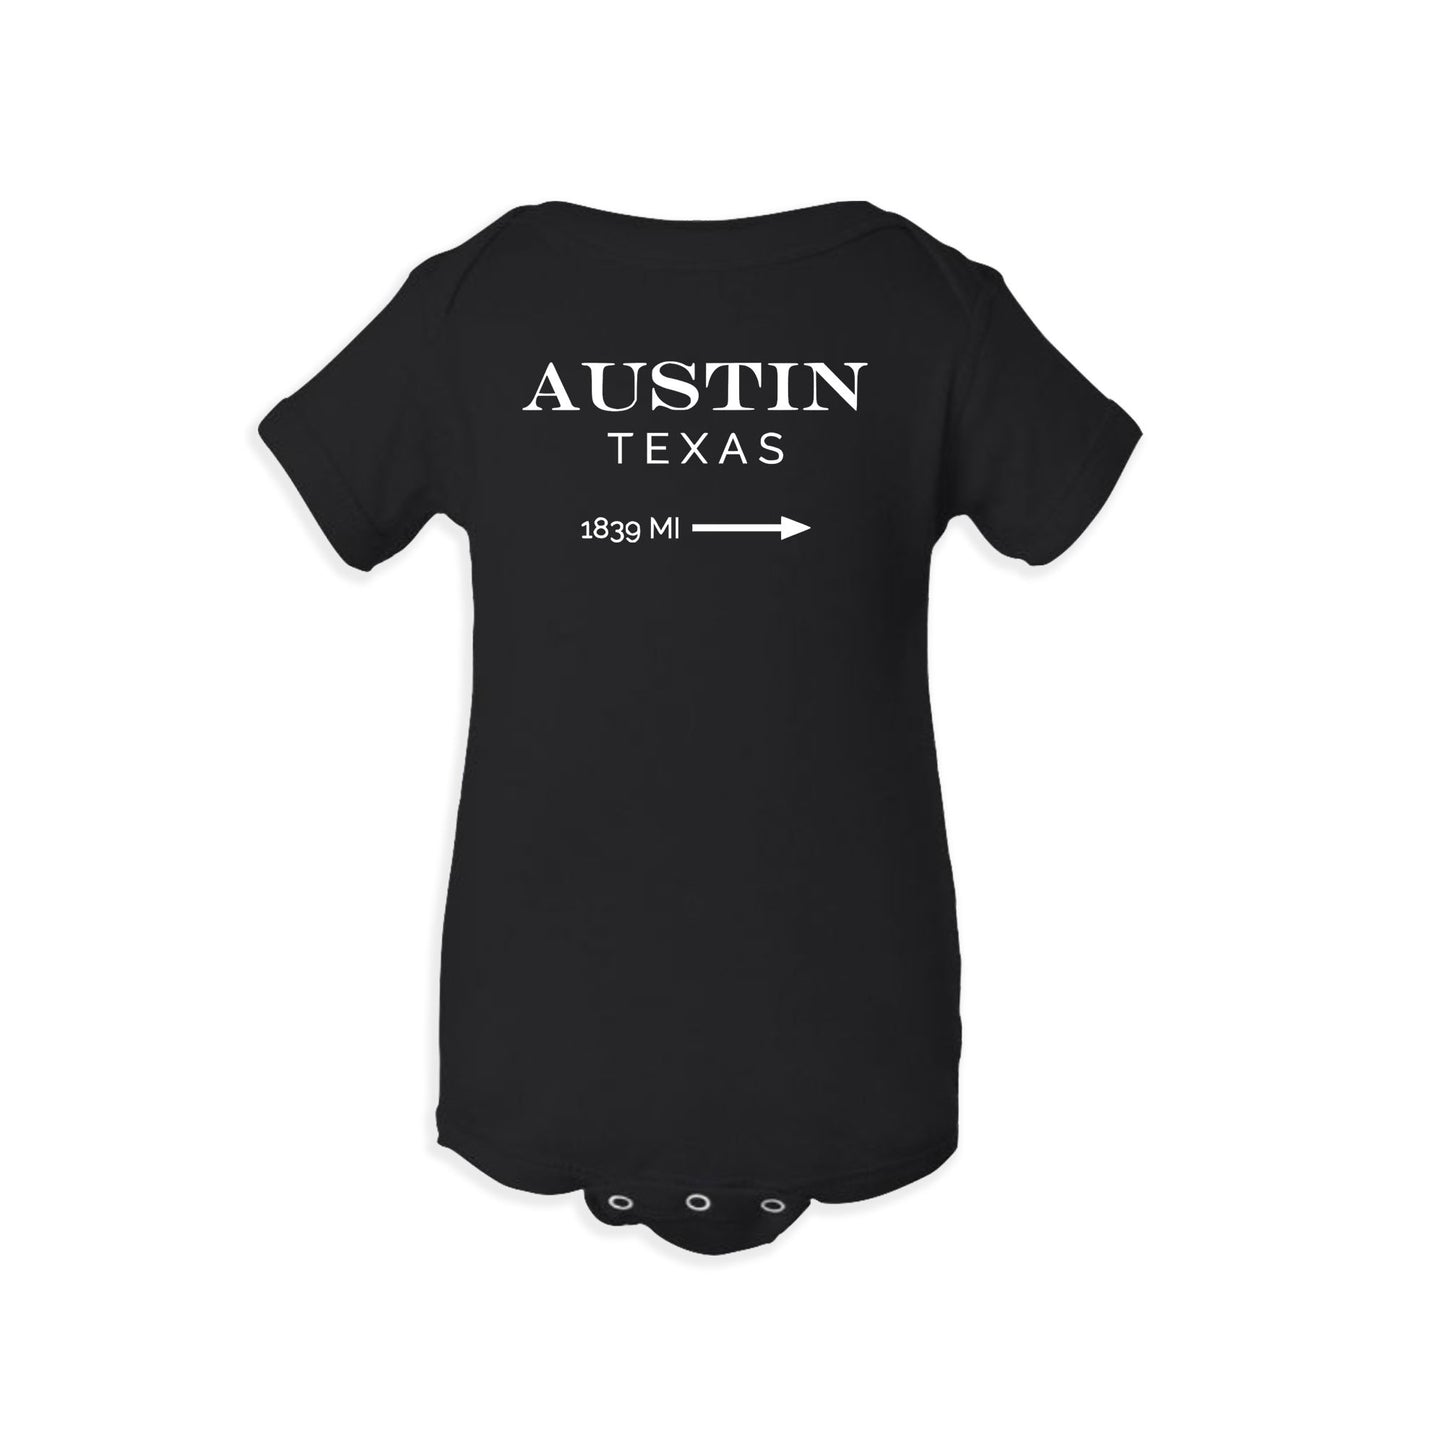 Austin Texas Bodysuit (Mile Marker)-Bodysuits-Baby Bae Boutique